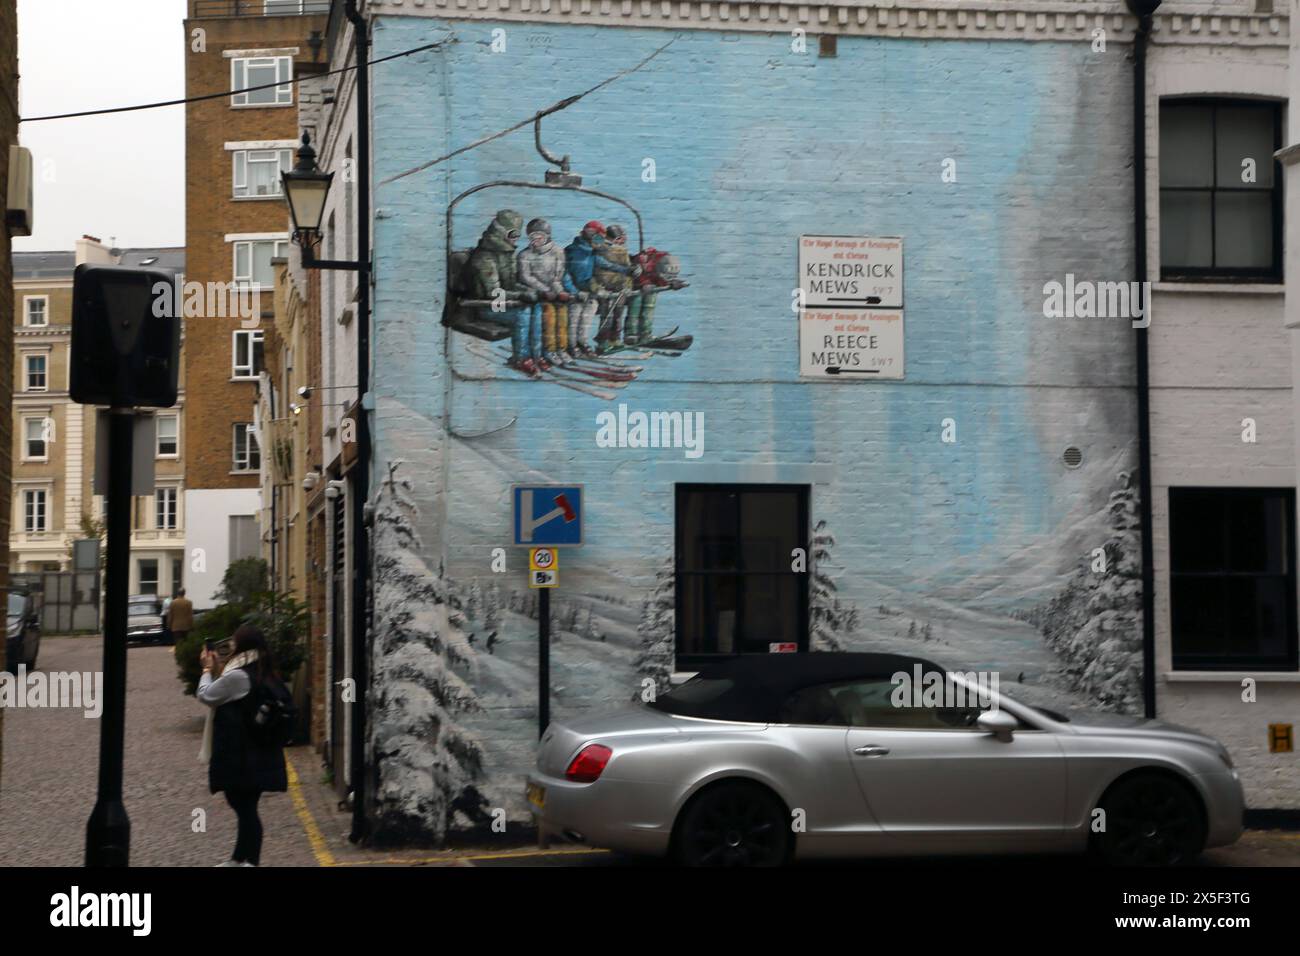 Ski Mural dipinto sul lato di Una casa a Reece Mews Kensington Londra Inghilterra Foto Stock